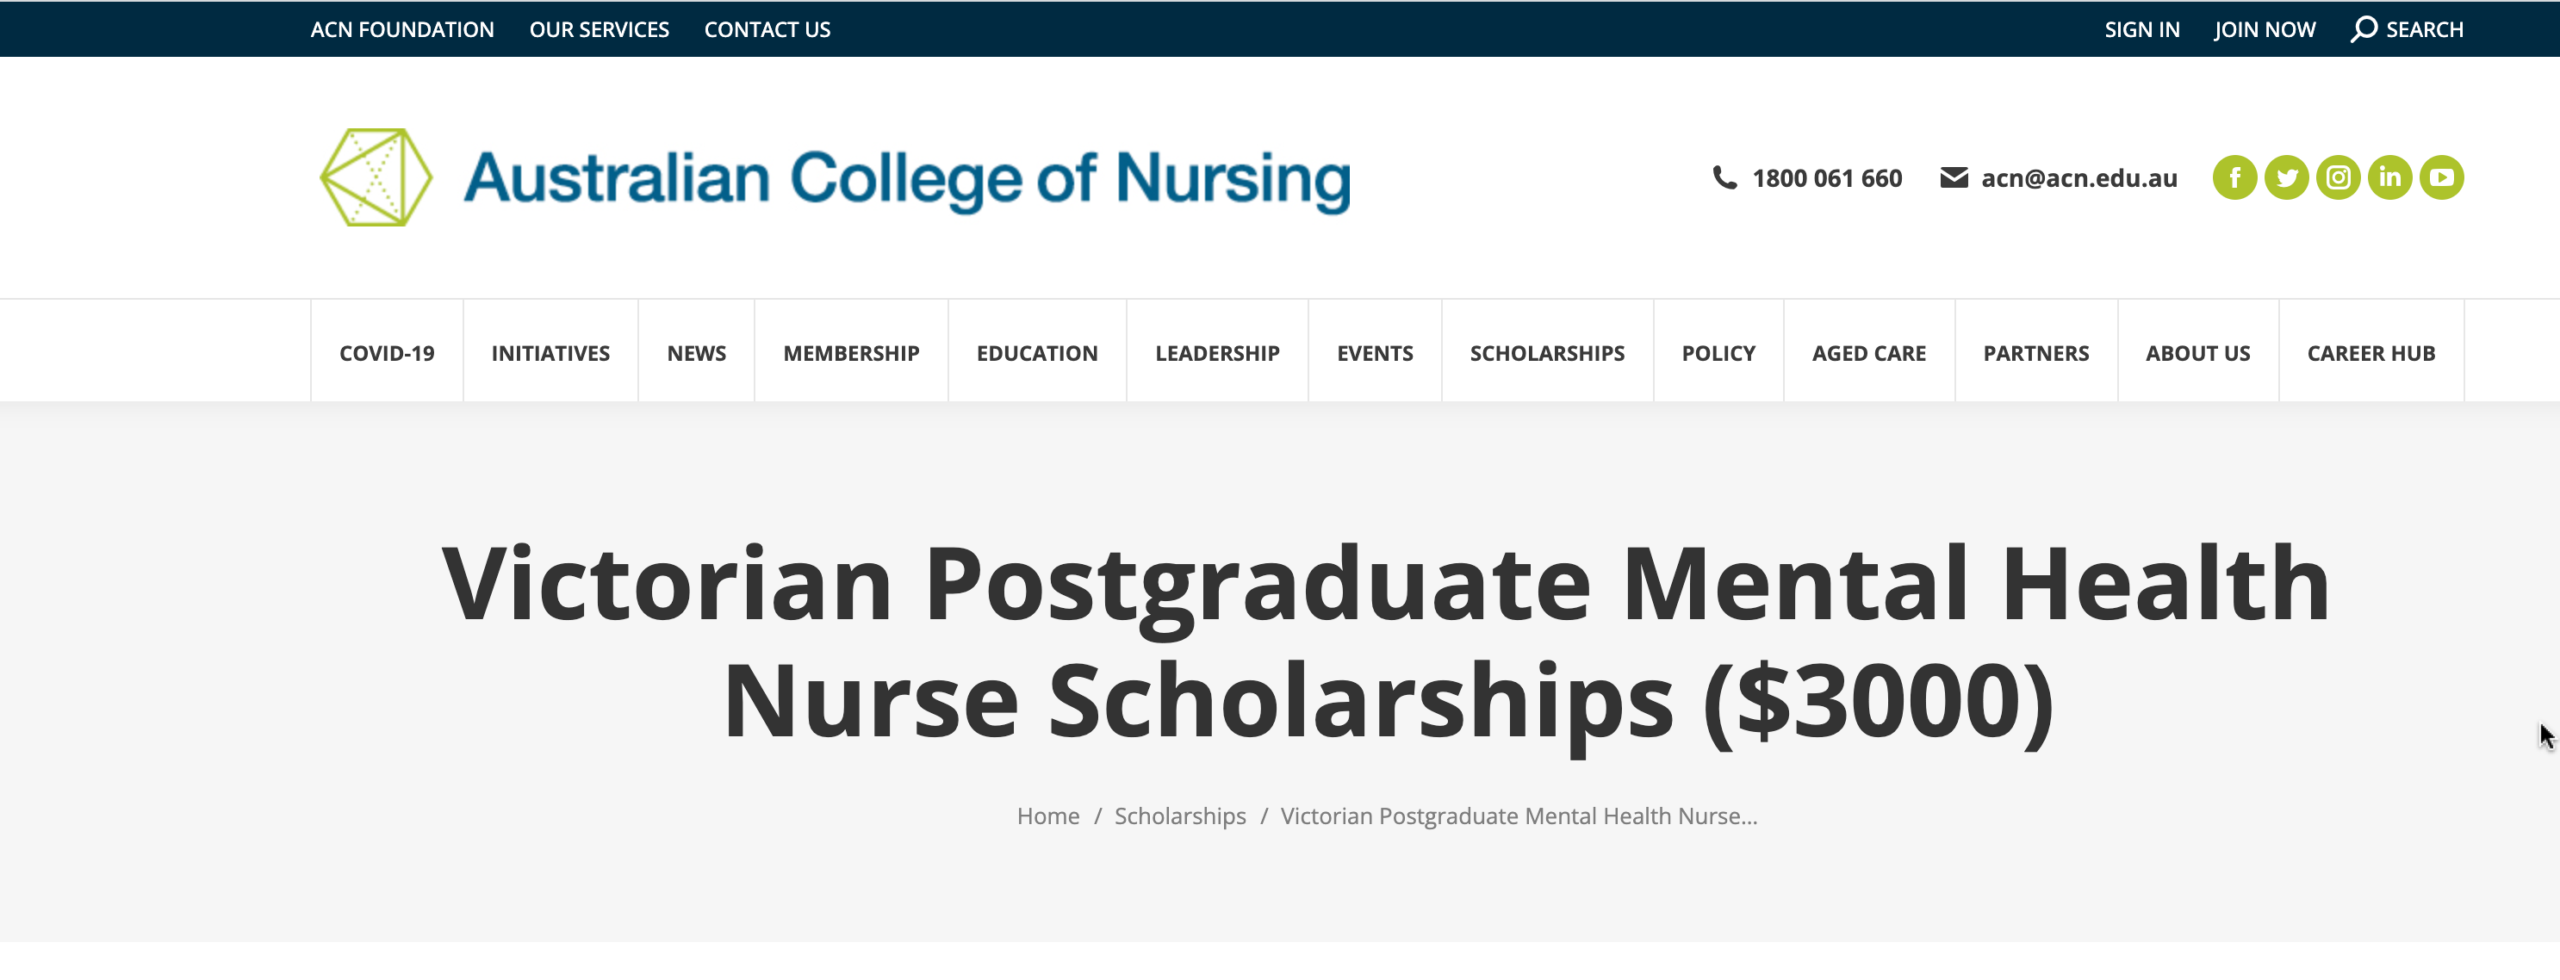 Victorian Postgraduate Mental Health Nurse Scholarships ($3000)